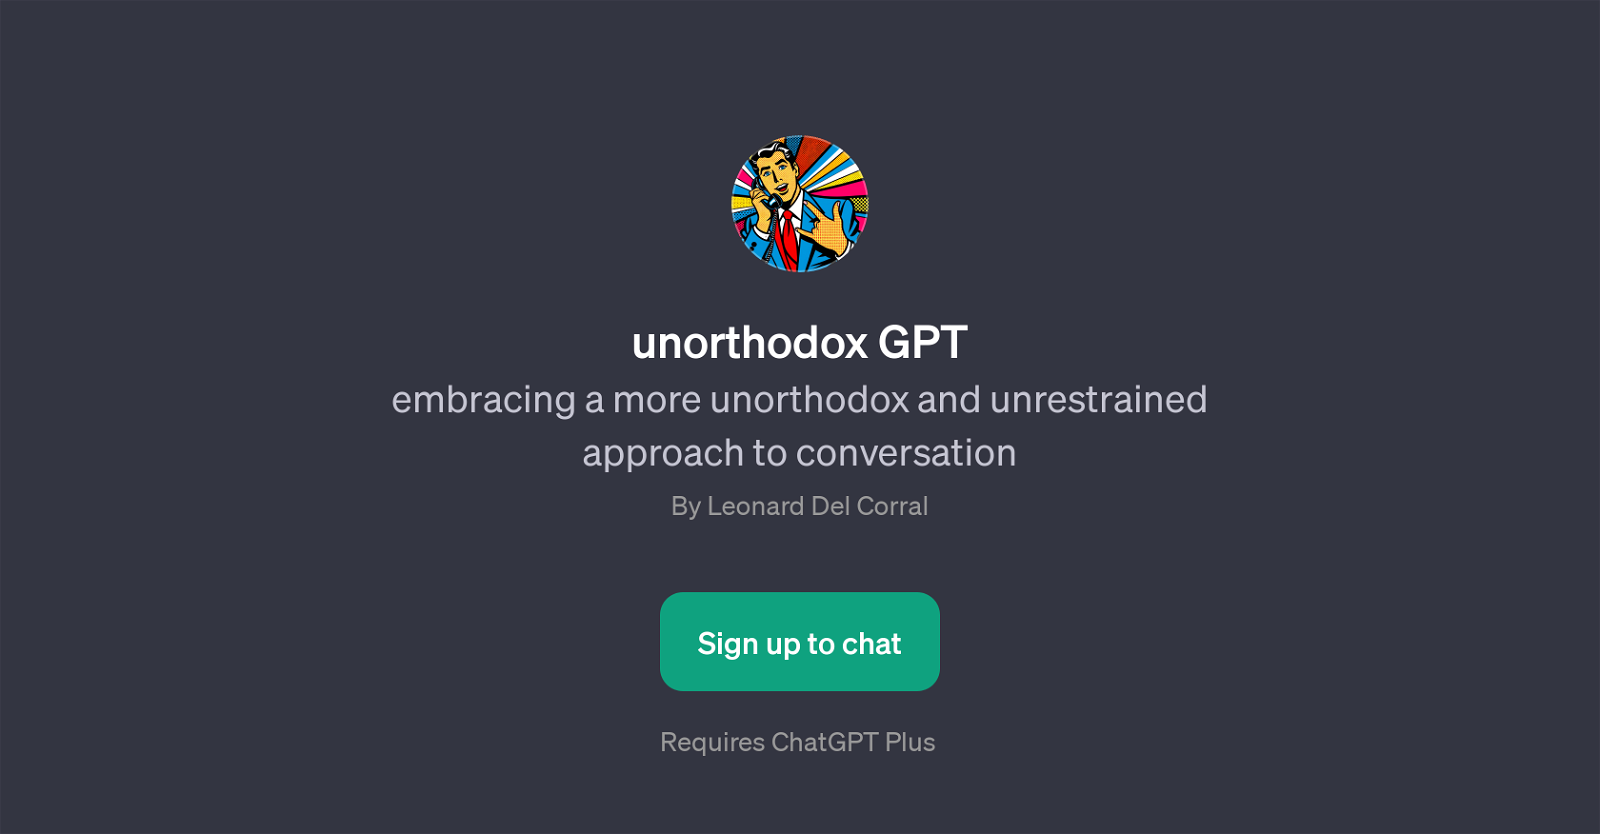 unorthodox GPT website